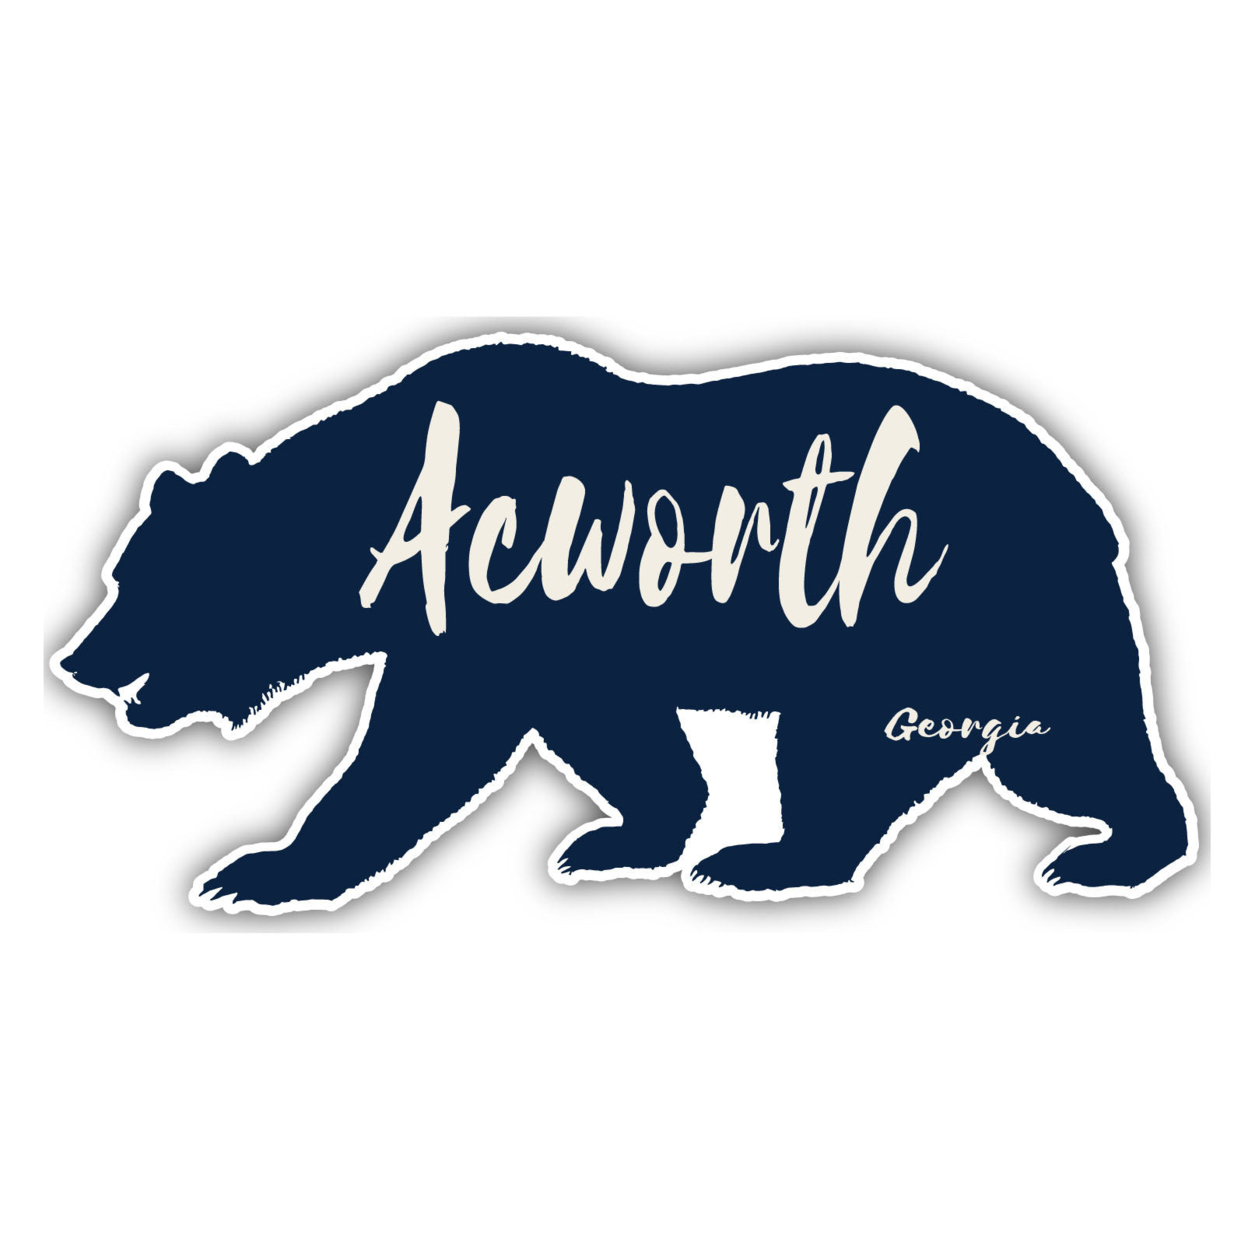 Acworth Georgia Souvenir Decorative Stickers (Choose Theme And Size) - Single Unit, 6-Inch, Bear